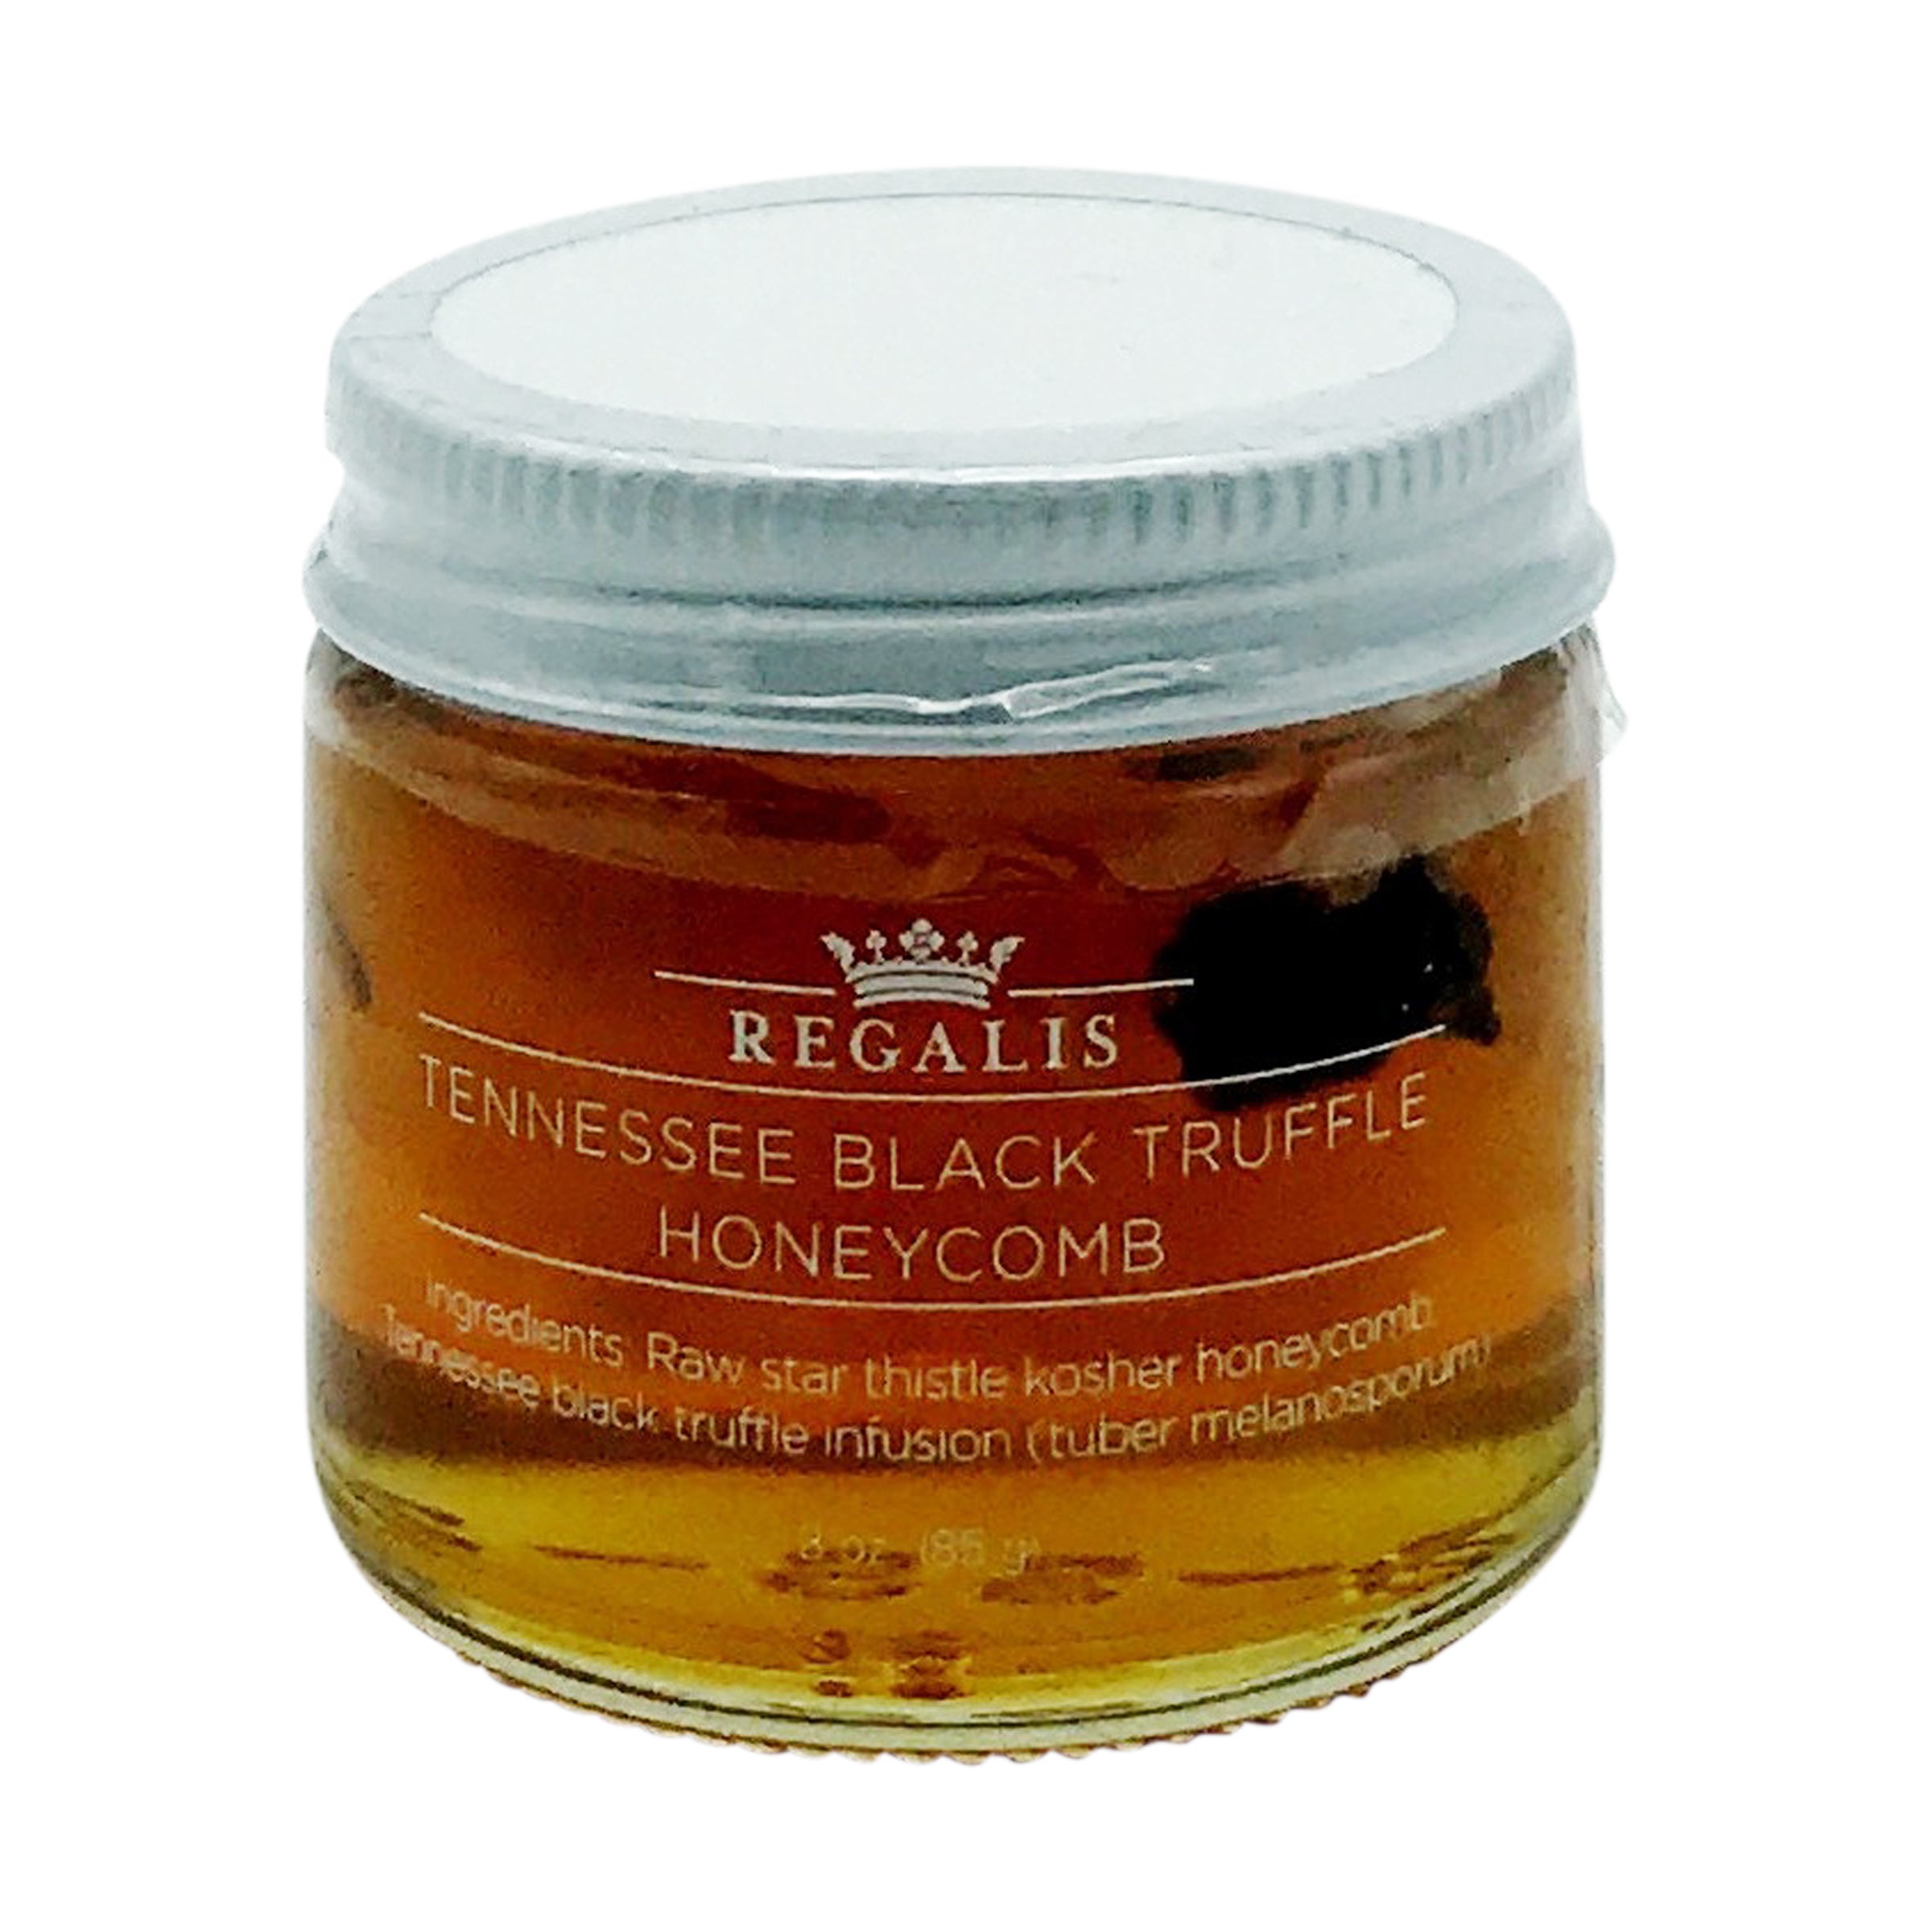 Regalis, Tennessee Black Truffle Honeycomb, 3 oz